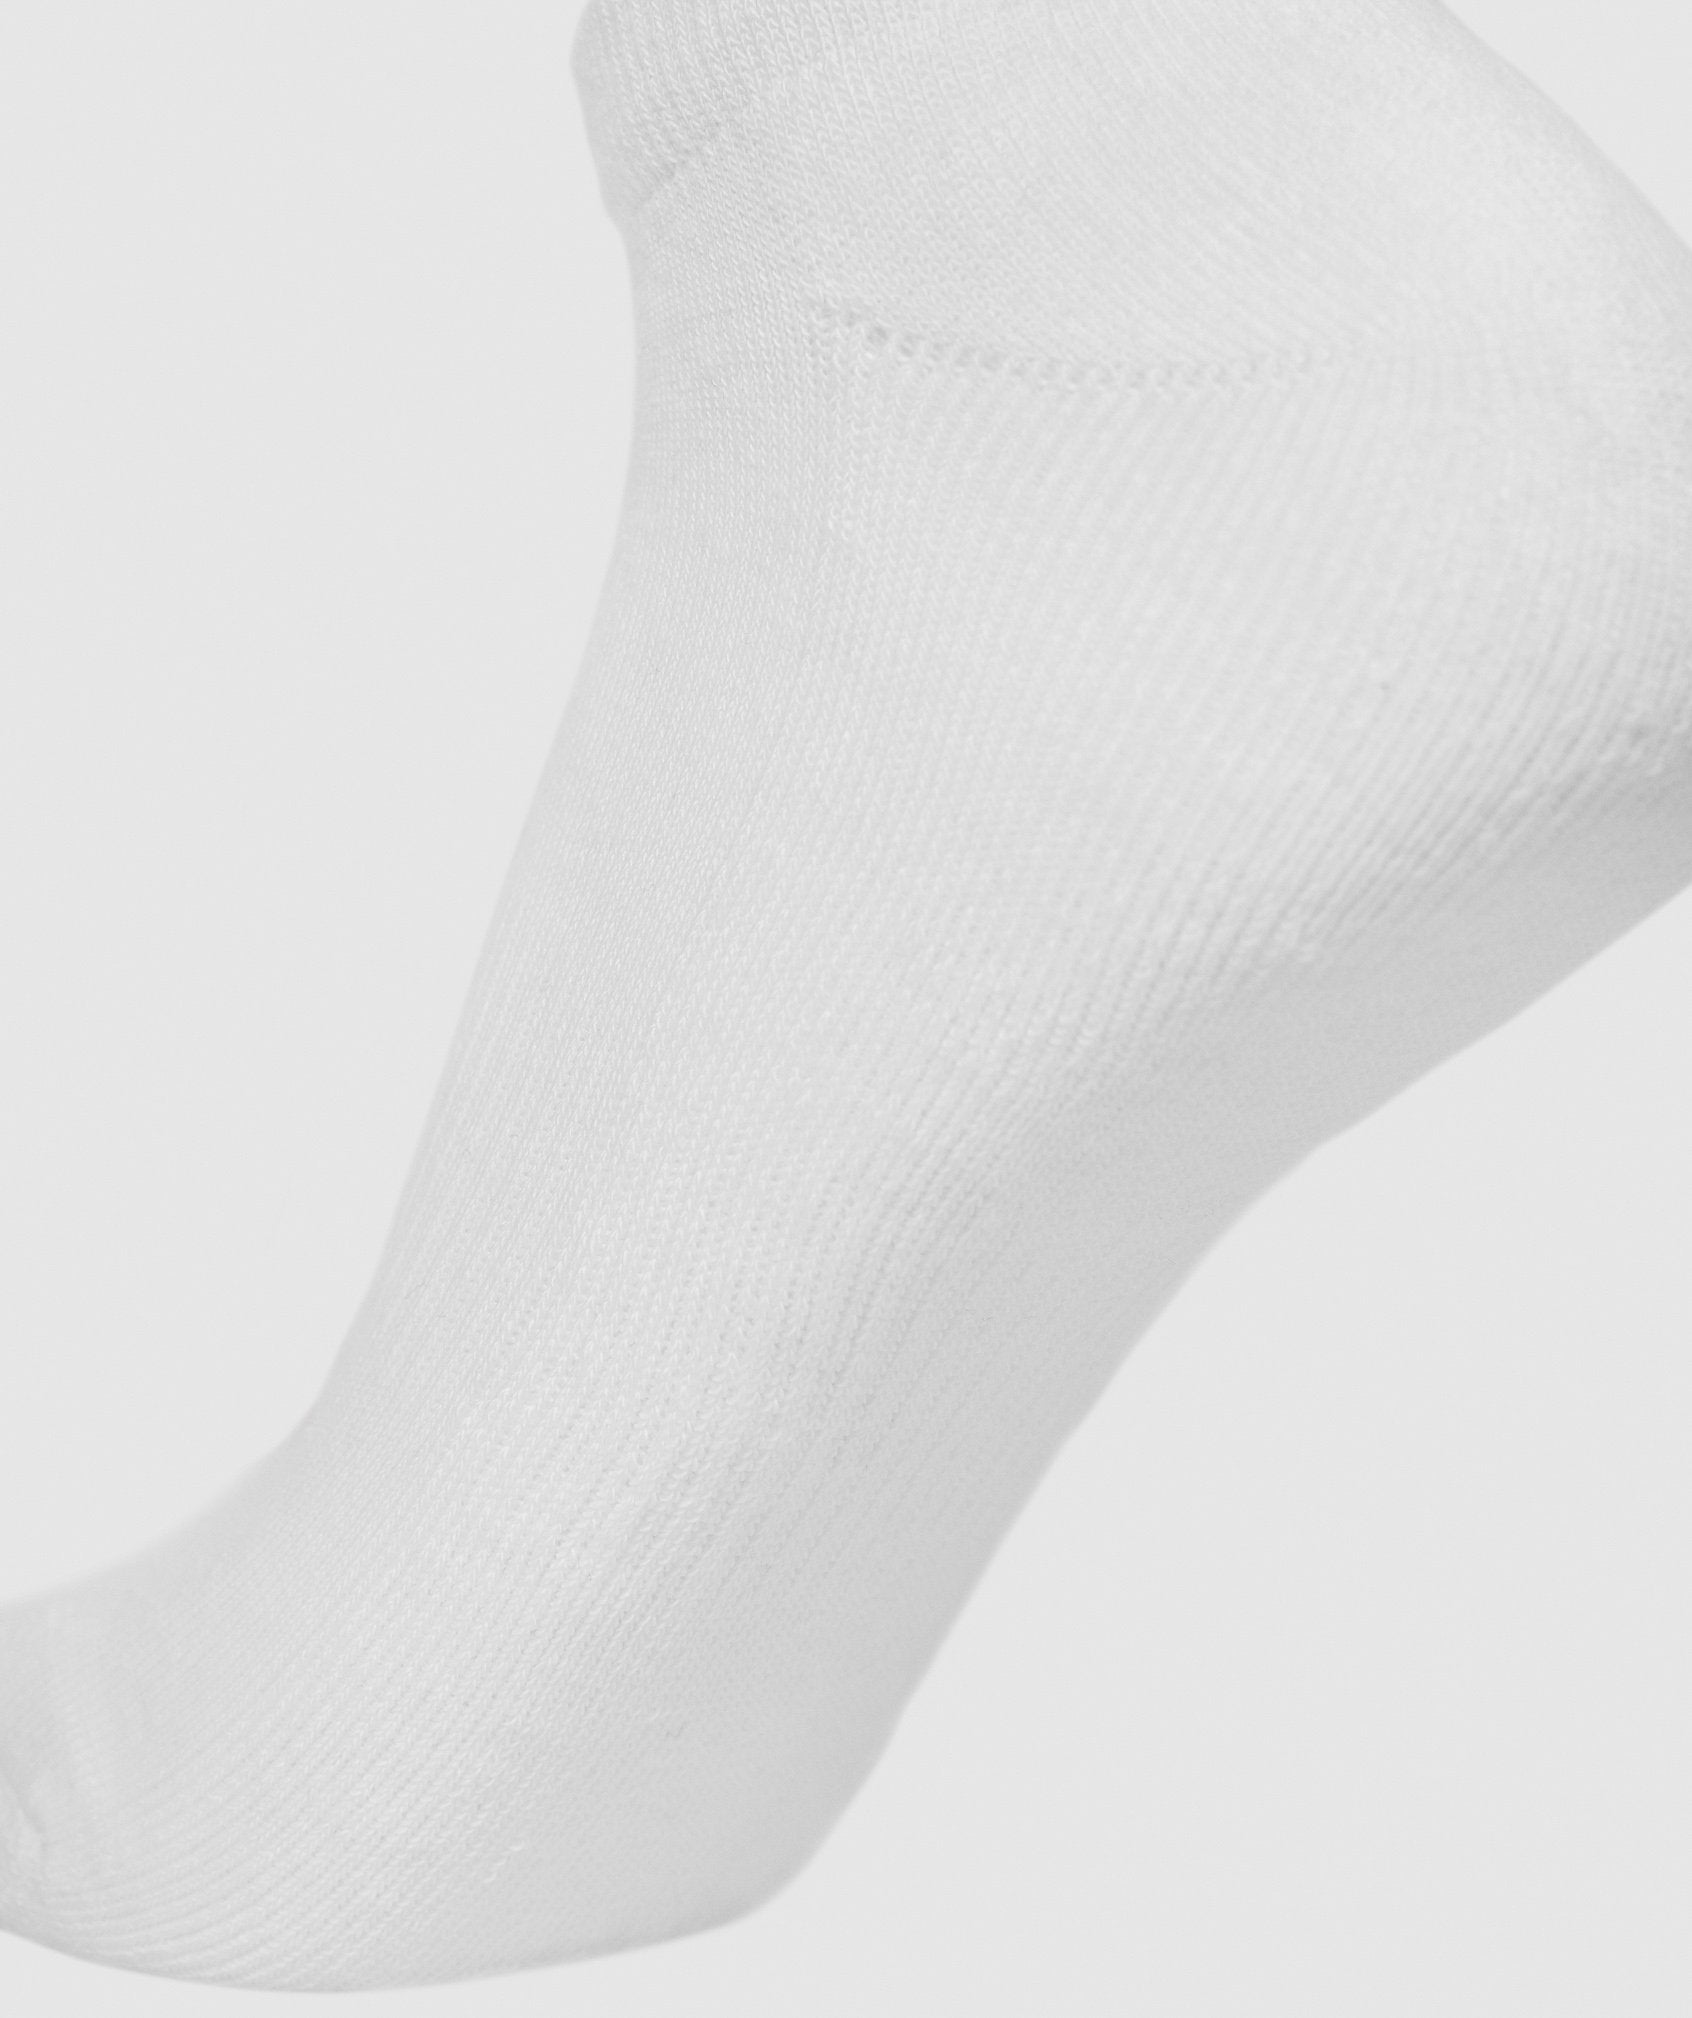 Womens Ladies Trainer Socks (3pk) in White/Oyster White/Black - view 4